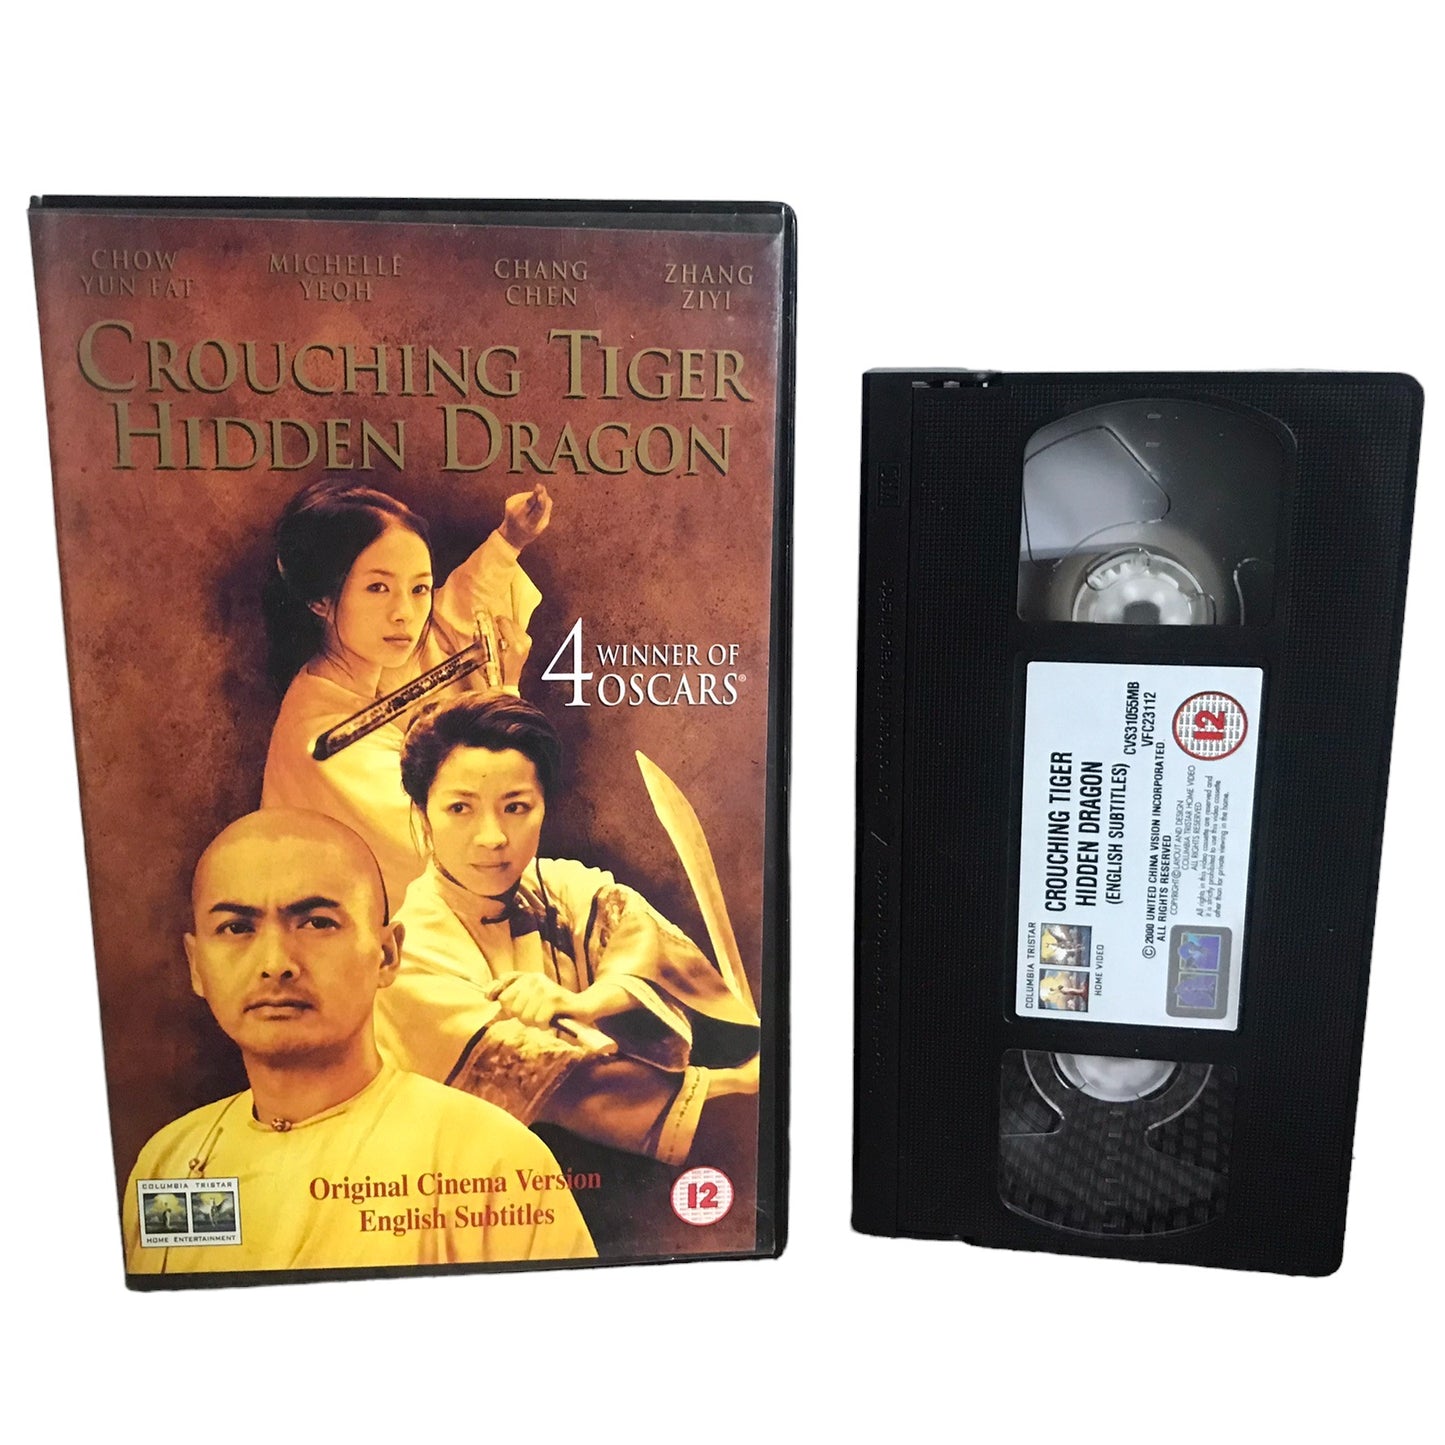 Crouching Tiger Hidden Dragon - Chow Yun Fat - Columbia Tristar Home Video - Large Box - Pal - VHS-